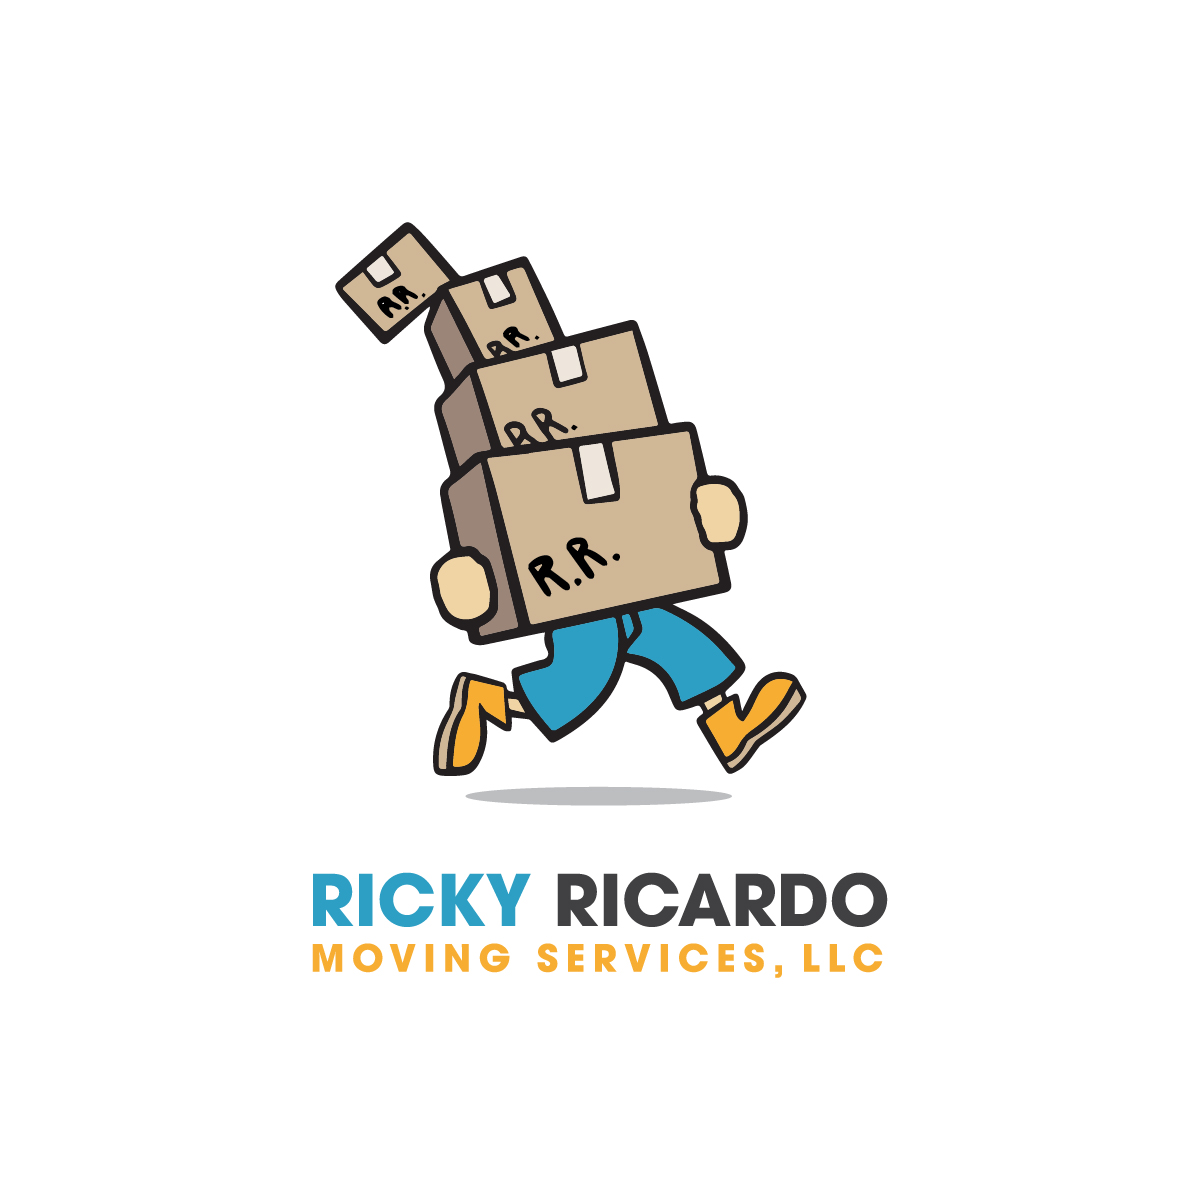 Ricky Ricardo Moving Services, LLC Logo